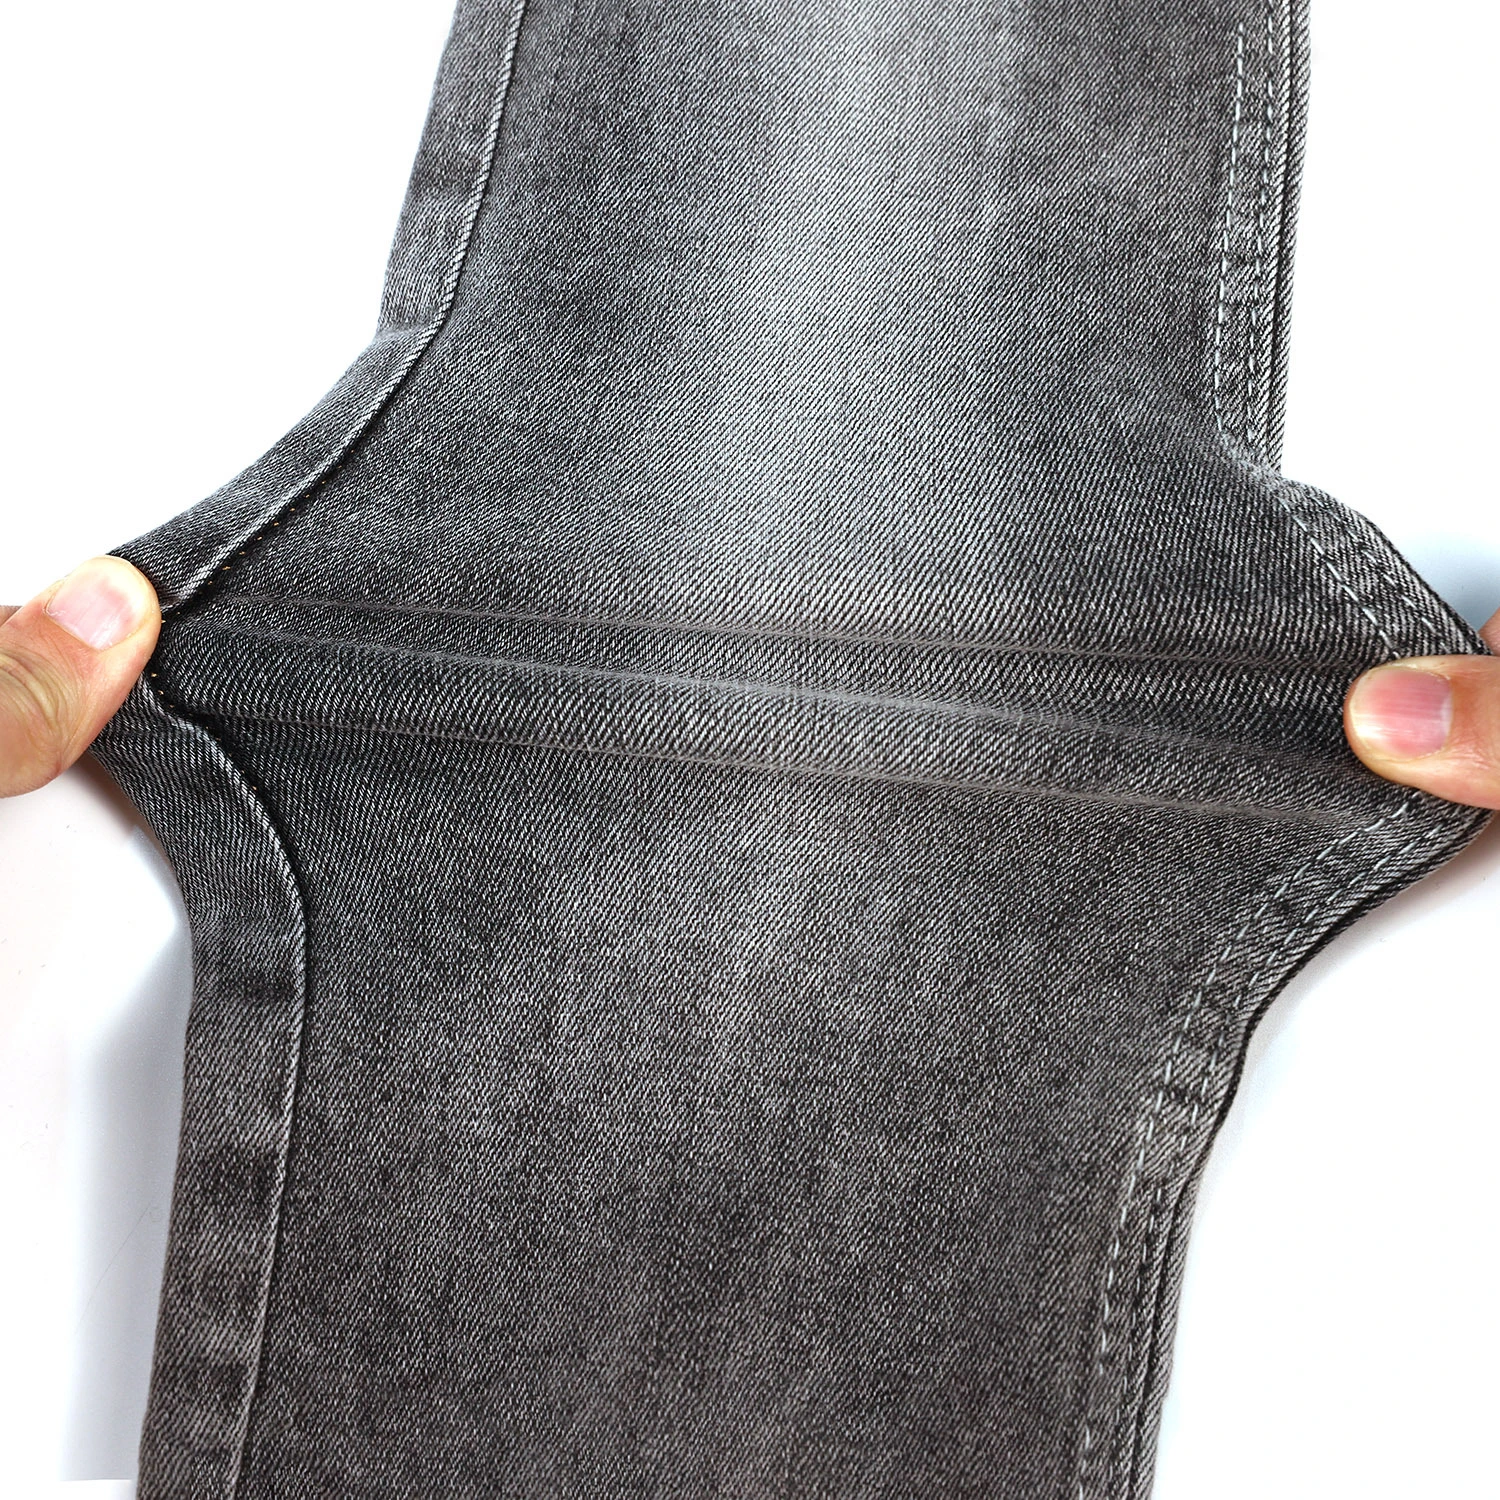 199B-16 10+10*14 Wholesale Black Color Supersoft Cotton Stretch Denim Fabric For Jeans 8